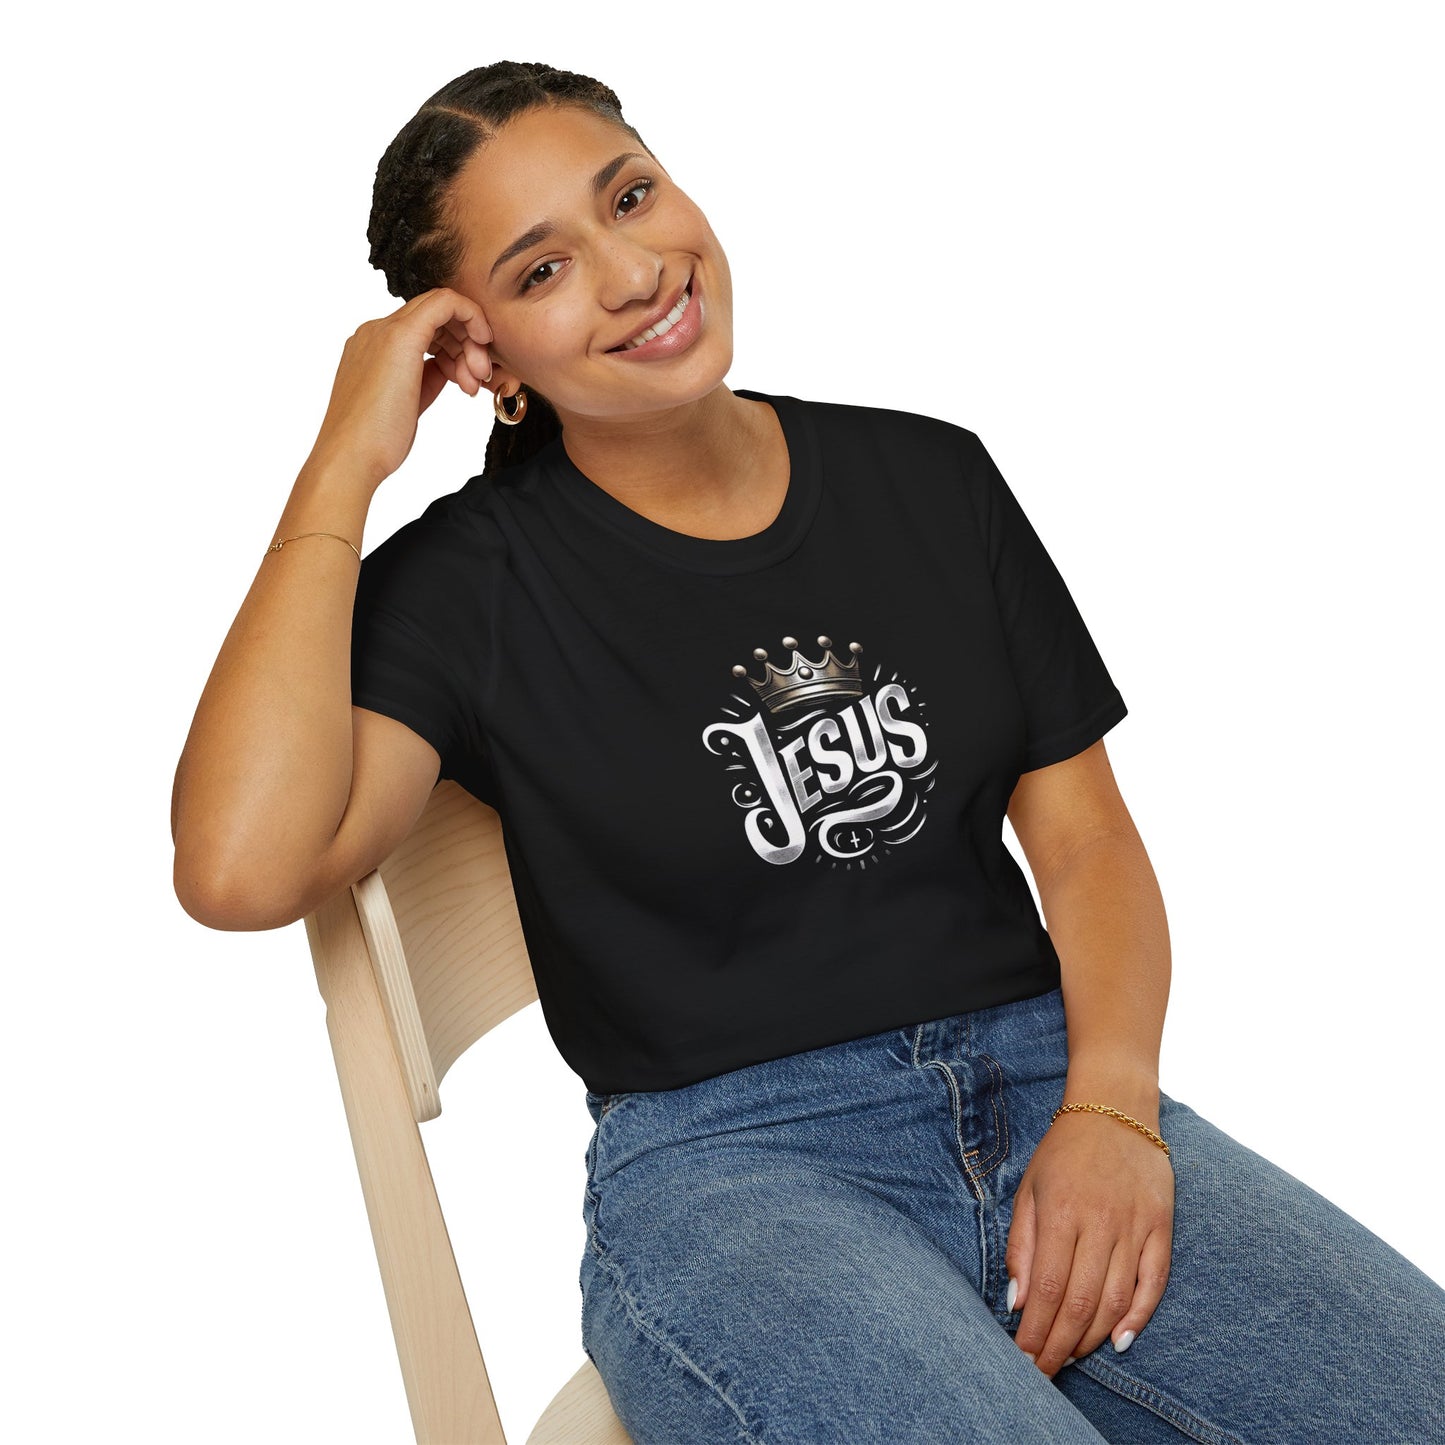 Majestic Representation Jesus Crowned Image Design 2 Unisex Soft Style T-Shirt